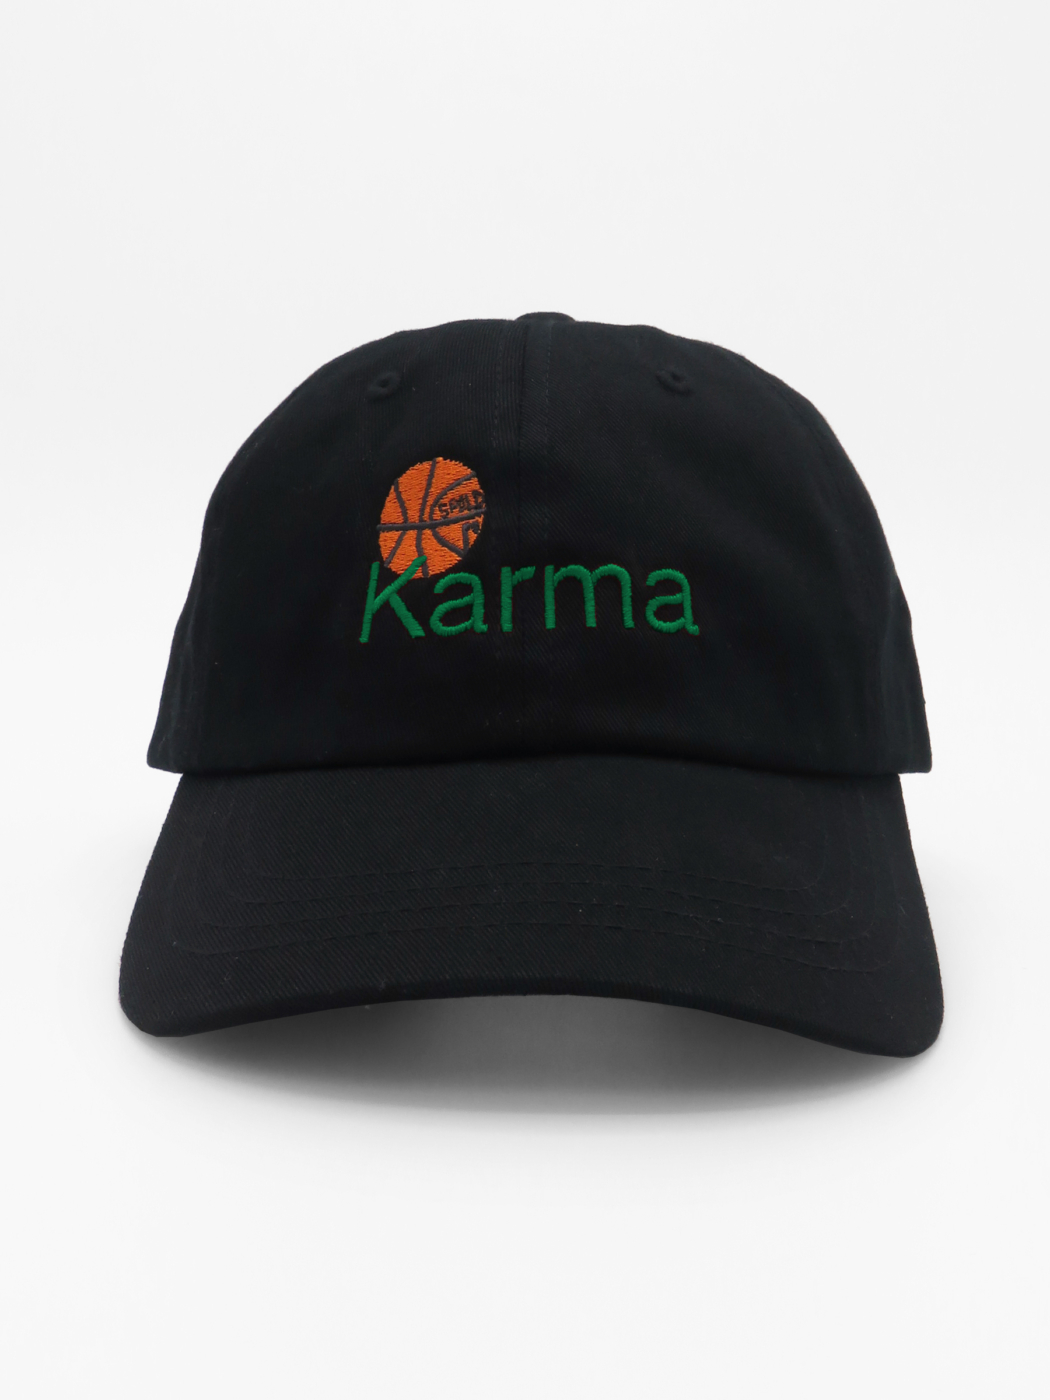 Jonas Wood, Karma Baseball Cap (Black &amp; Green)